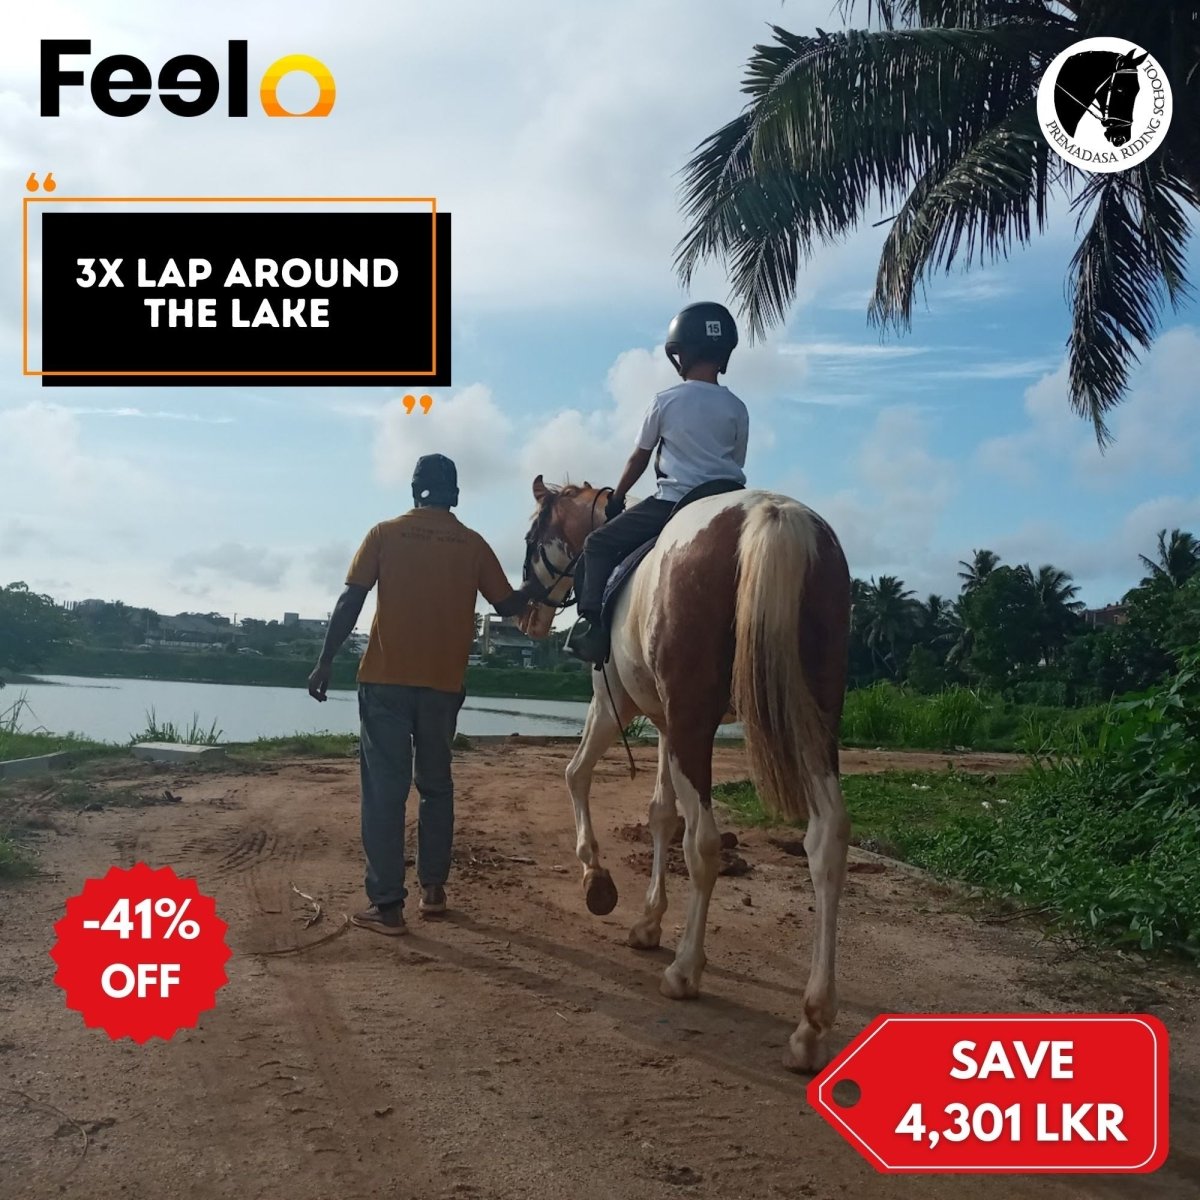 20 min, 40 min or 60 min Guided Horse Riding (laps) around a pleasing lake view - Premadasa Riding School, Nugegoda | Feelo